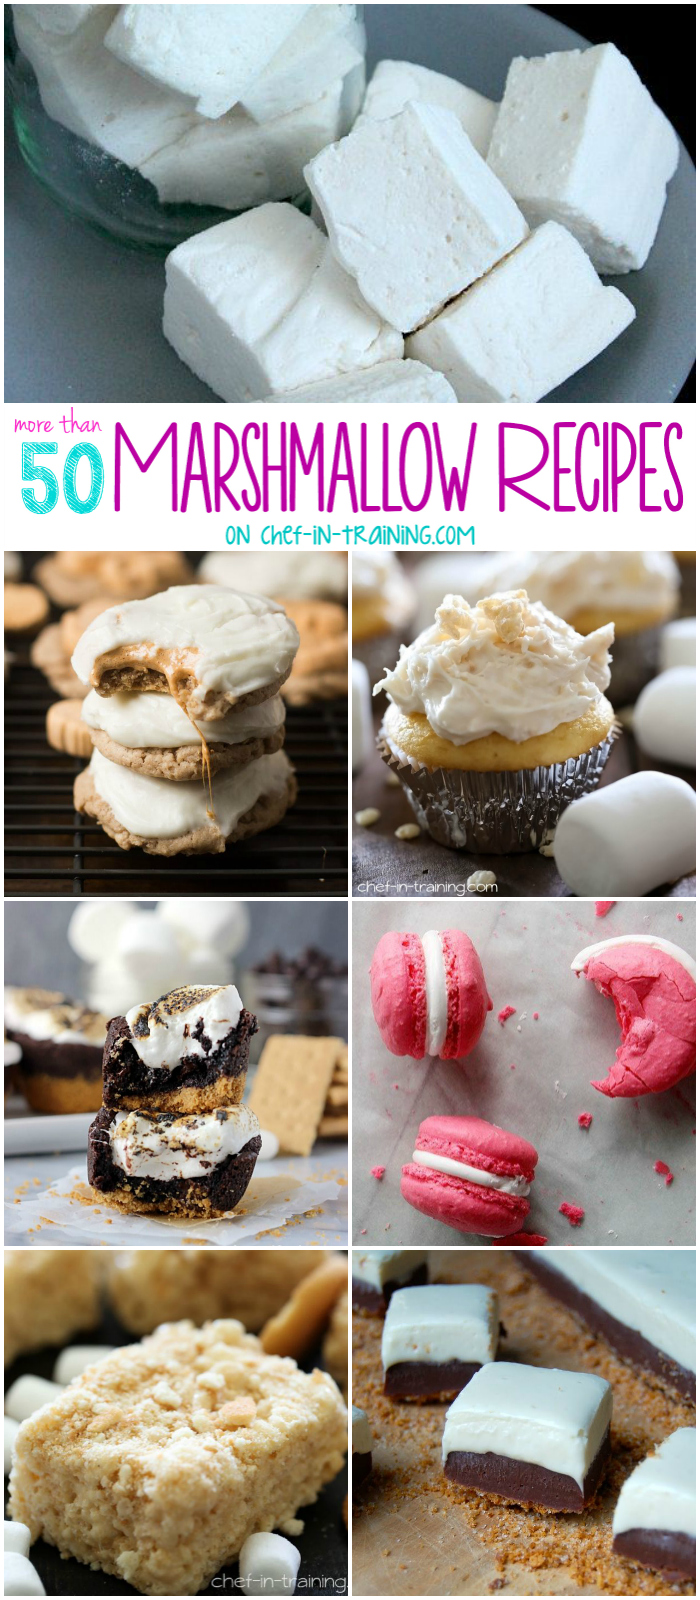 More than 50+ Marshmallow Recipes at chef-in-training.com ...SO many yummy recipes!